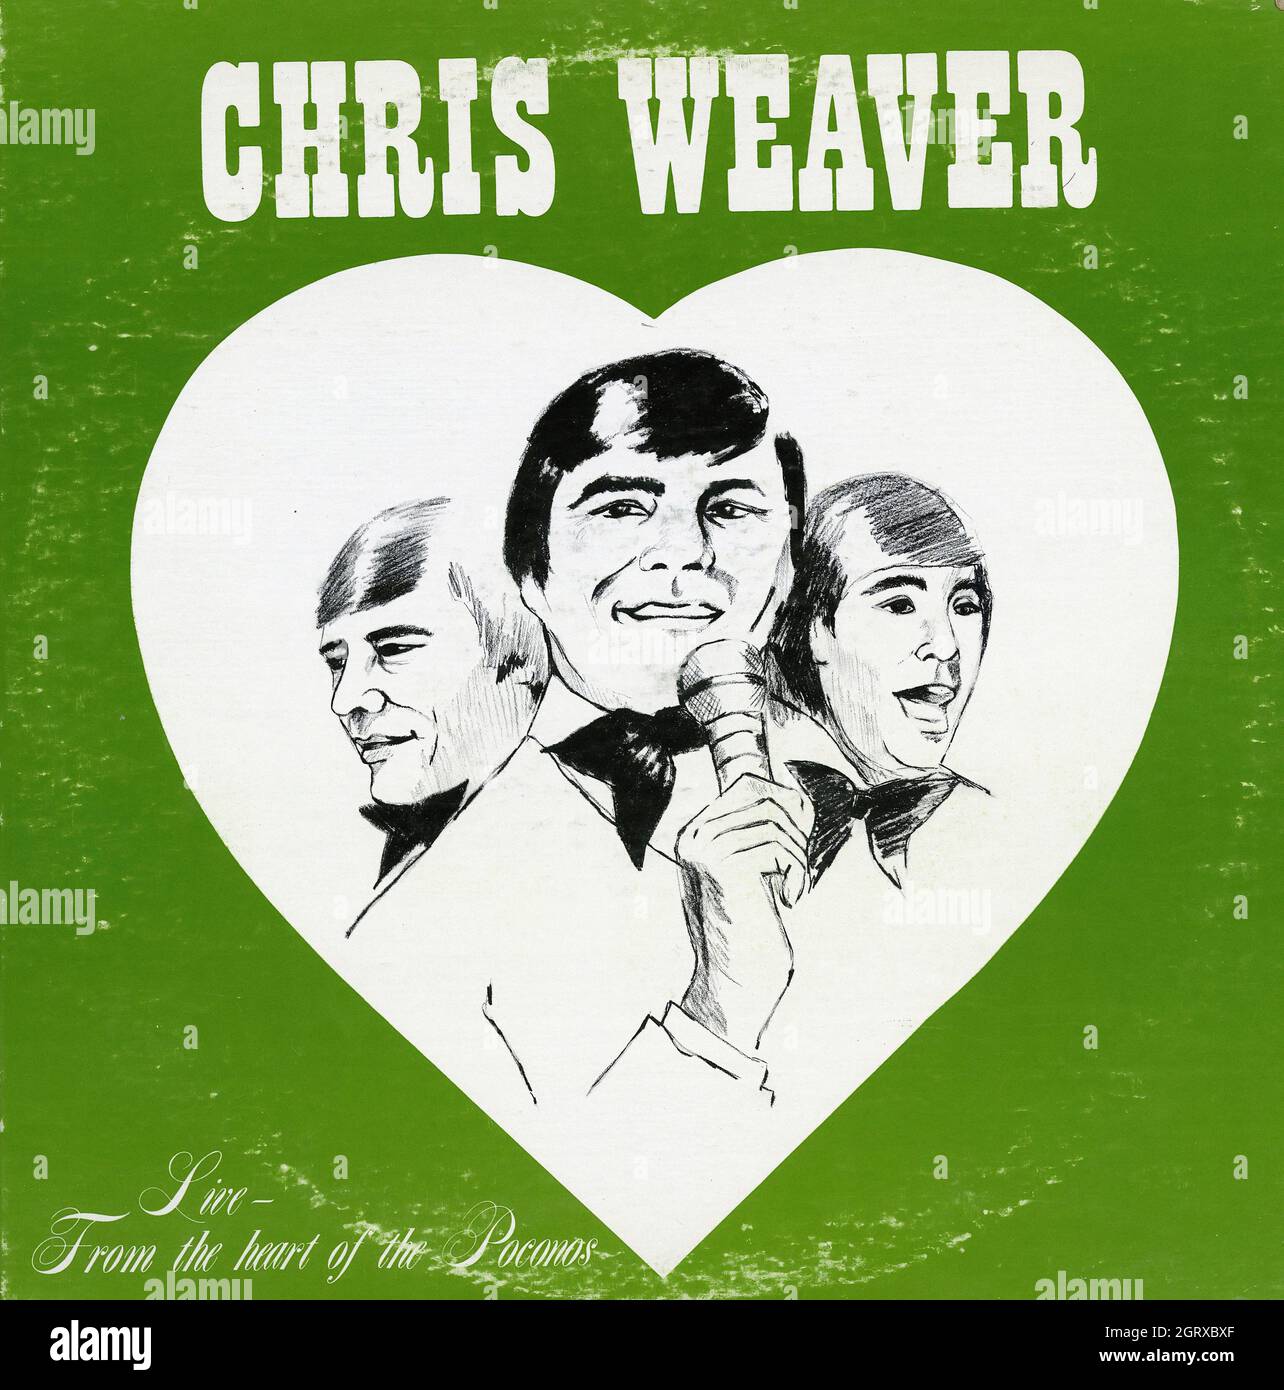 Chris Weaver - Live from the Heart of the Poconos - Vintage Vinyl Album Foto Stock